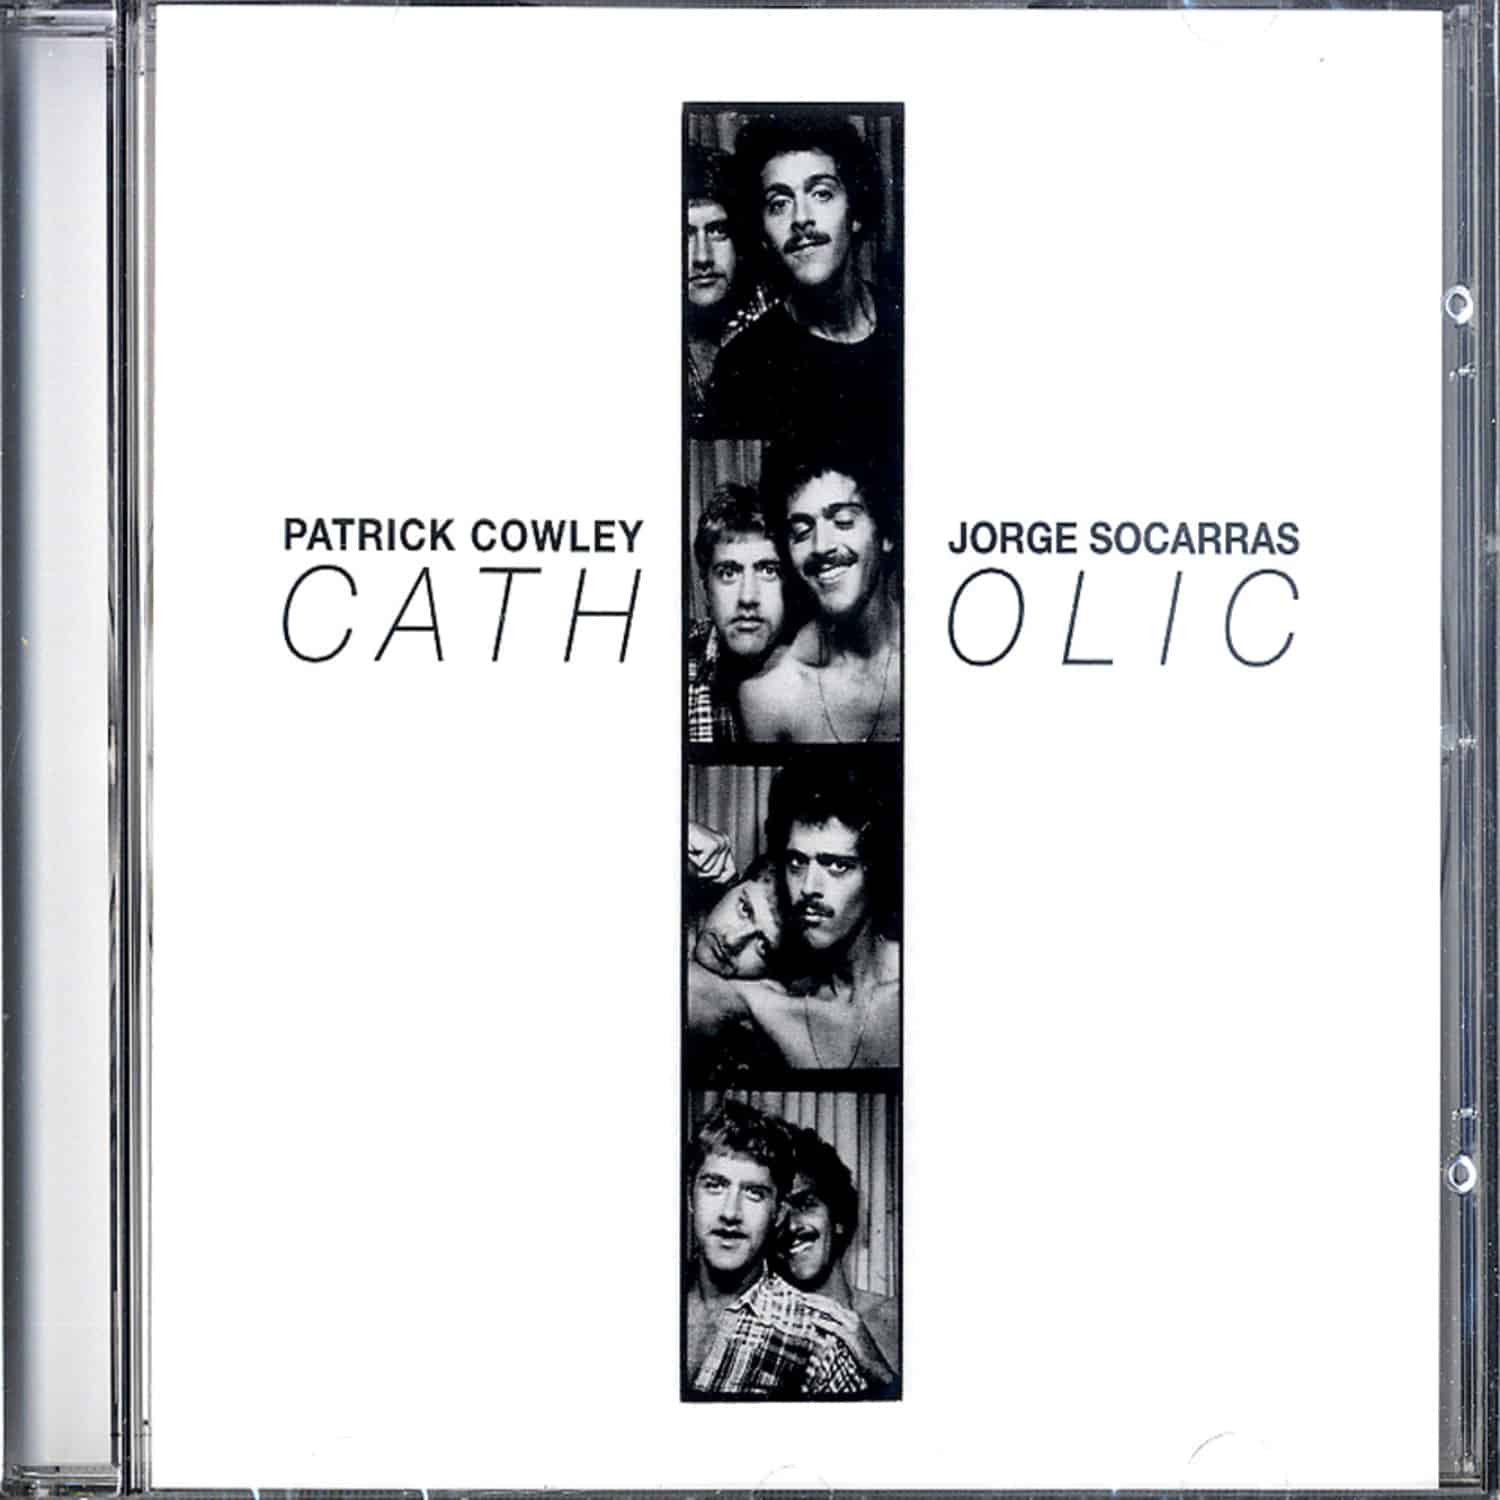 Patrick Cowley & Jorge Socarras - CATHOLIC 